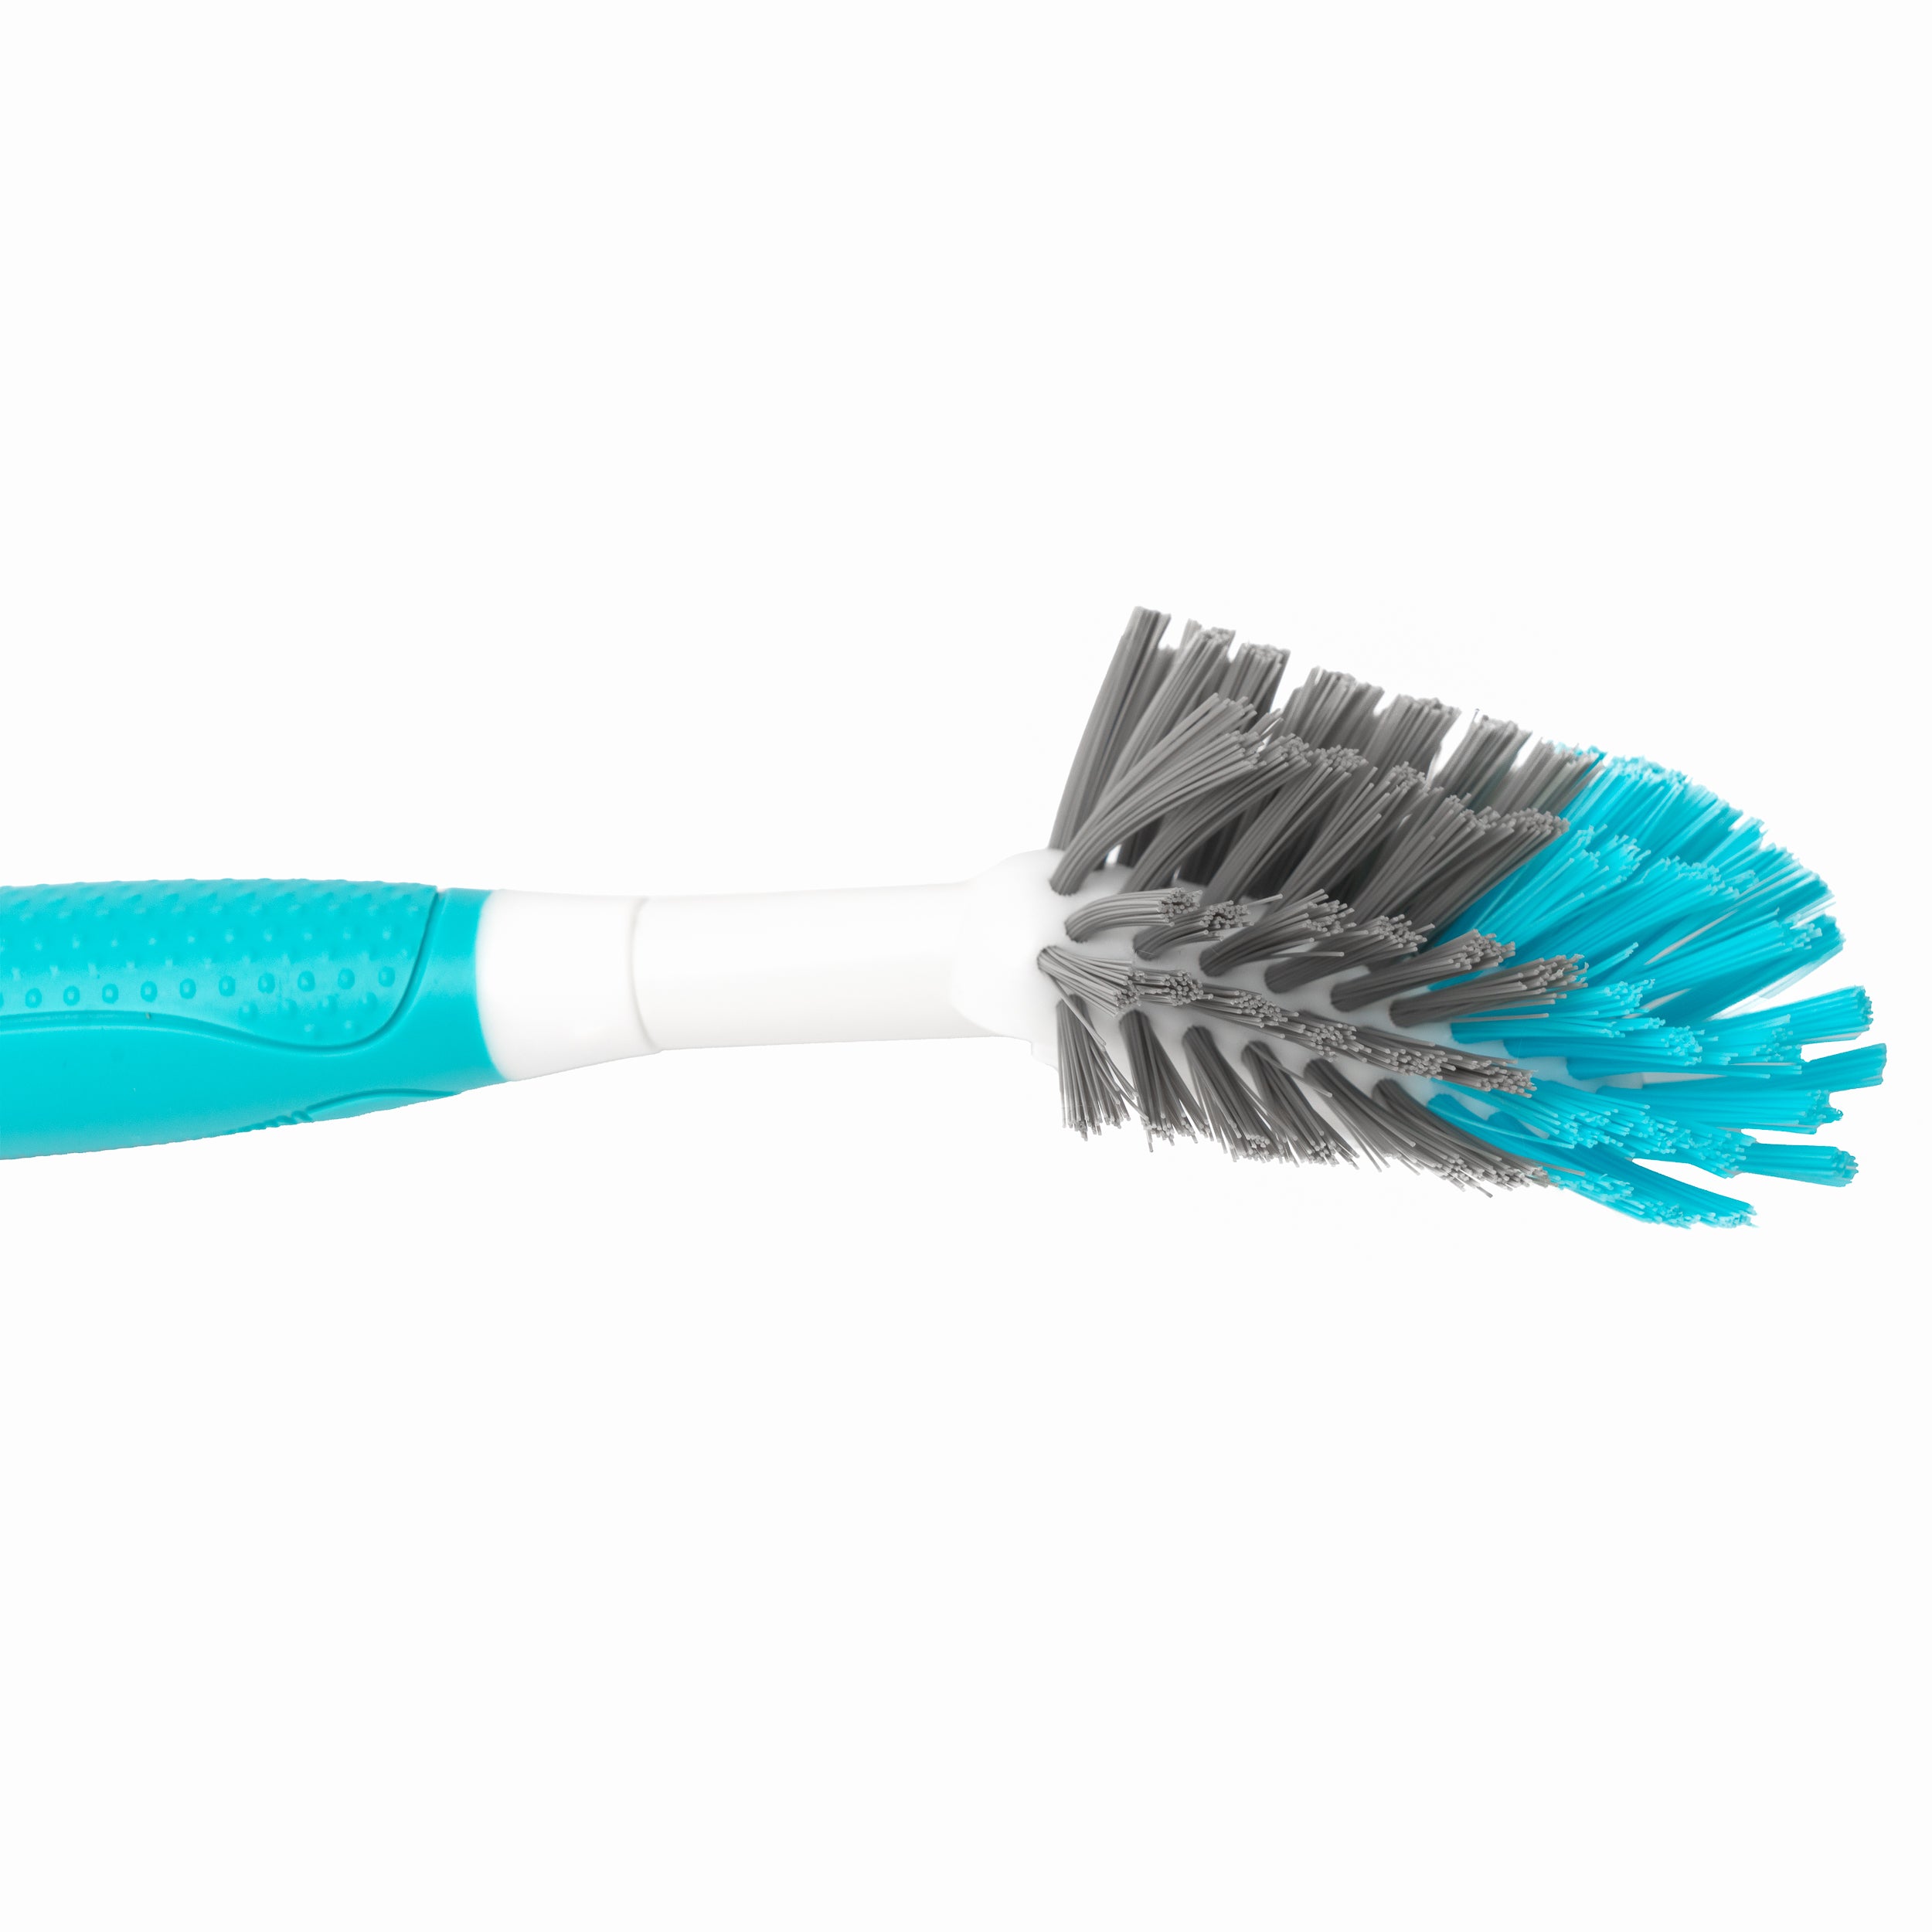 Dish Brushes — Fuller Brush Company